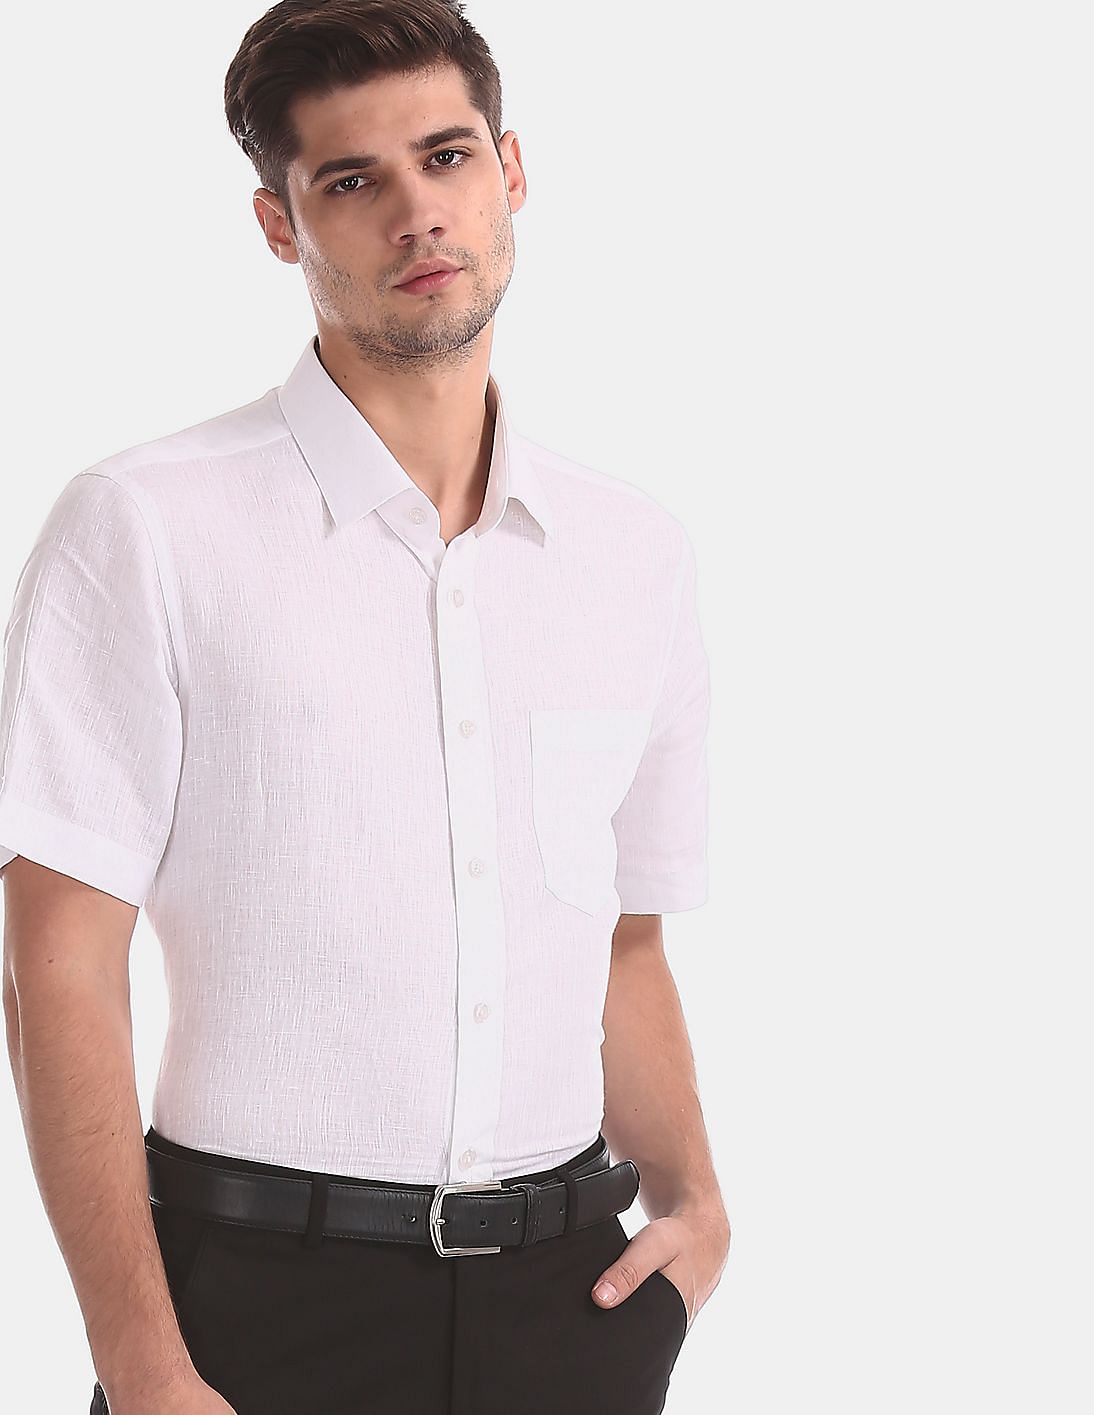 Buy AD by Arvind Men White Short Sleeve Solid Linen Formal Shirt ...